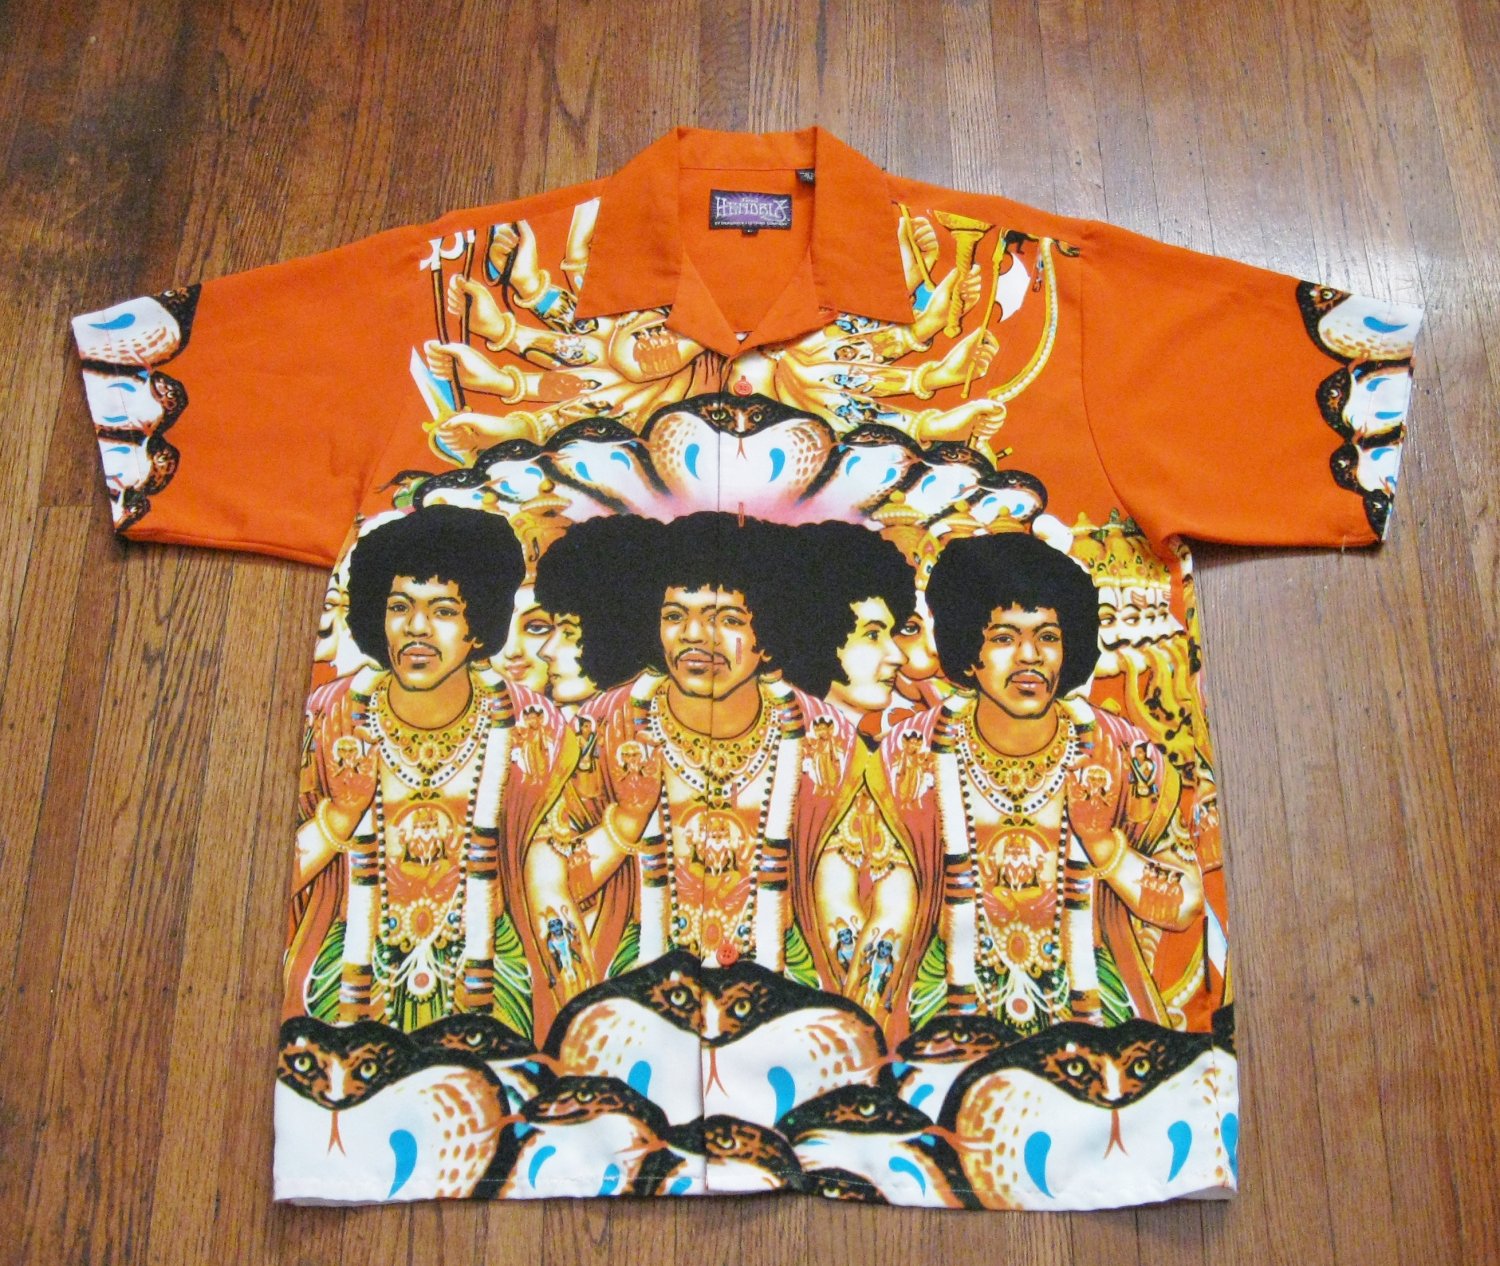 Jimi Hendrix "Axis/Bold As Love" Shirt Dragonfly Clothing Men's Sz Large